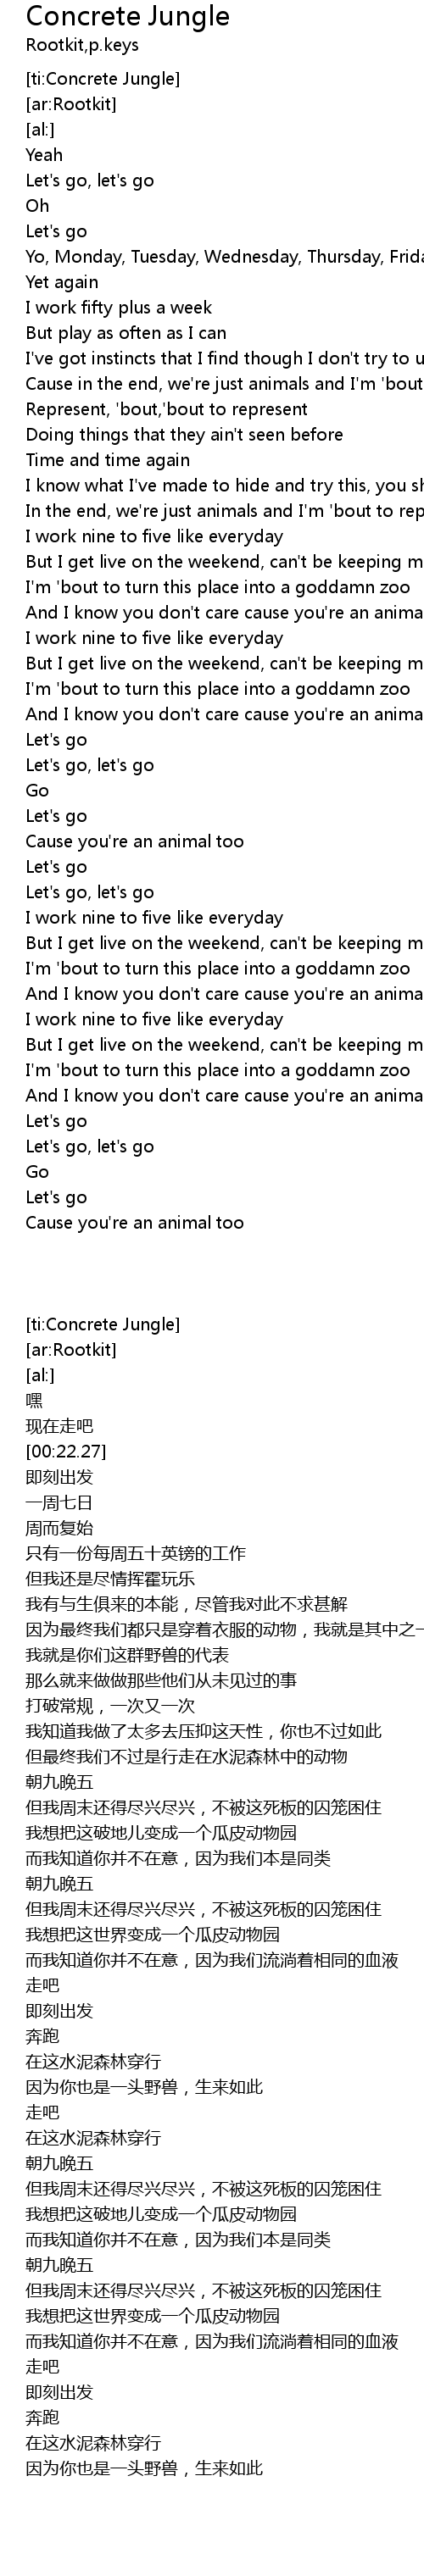 Concrete Jungle Lyrics